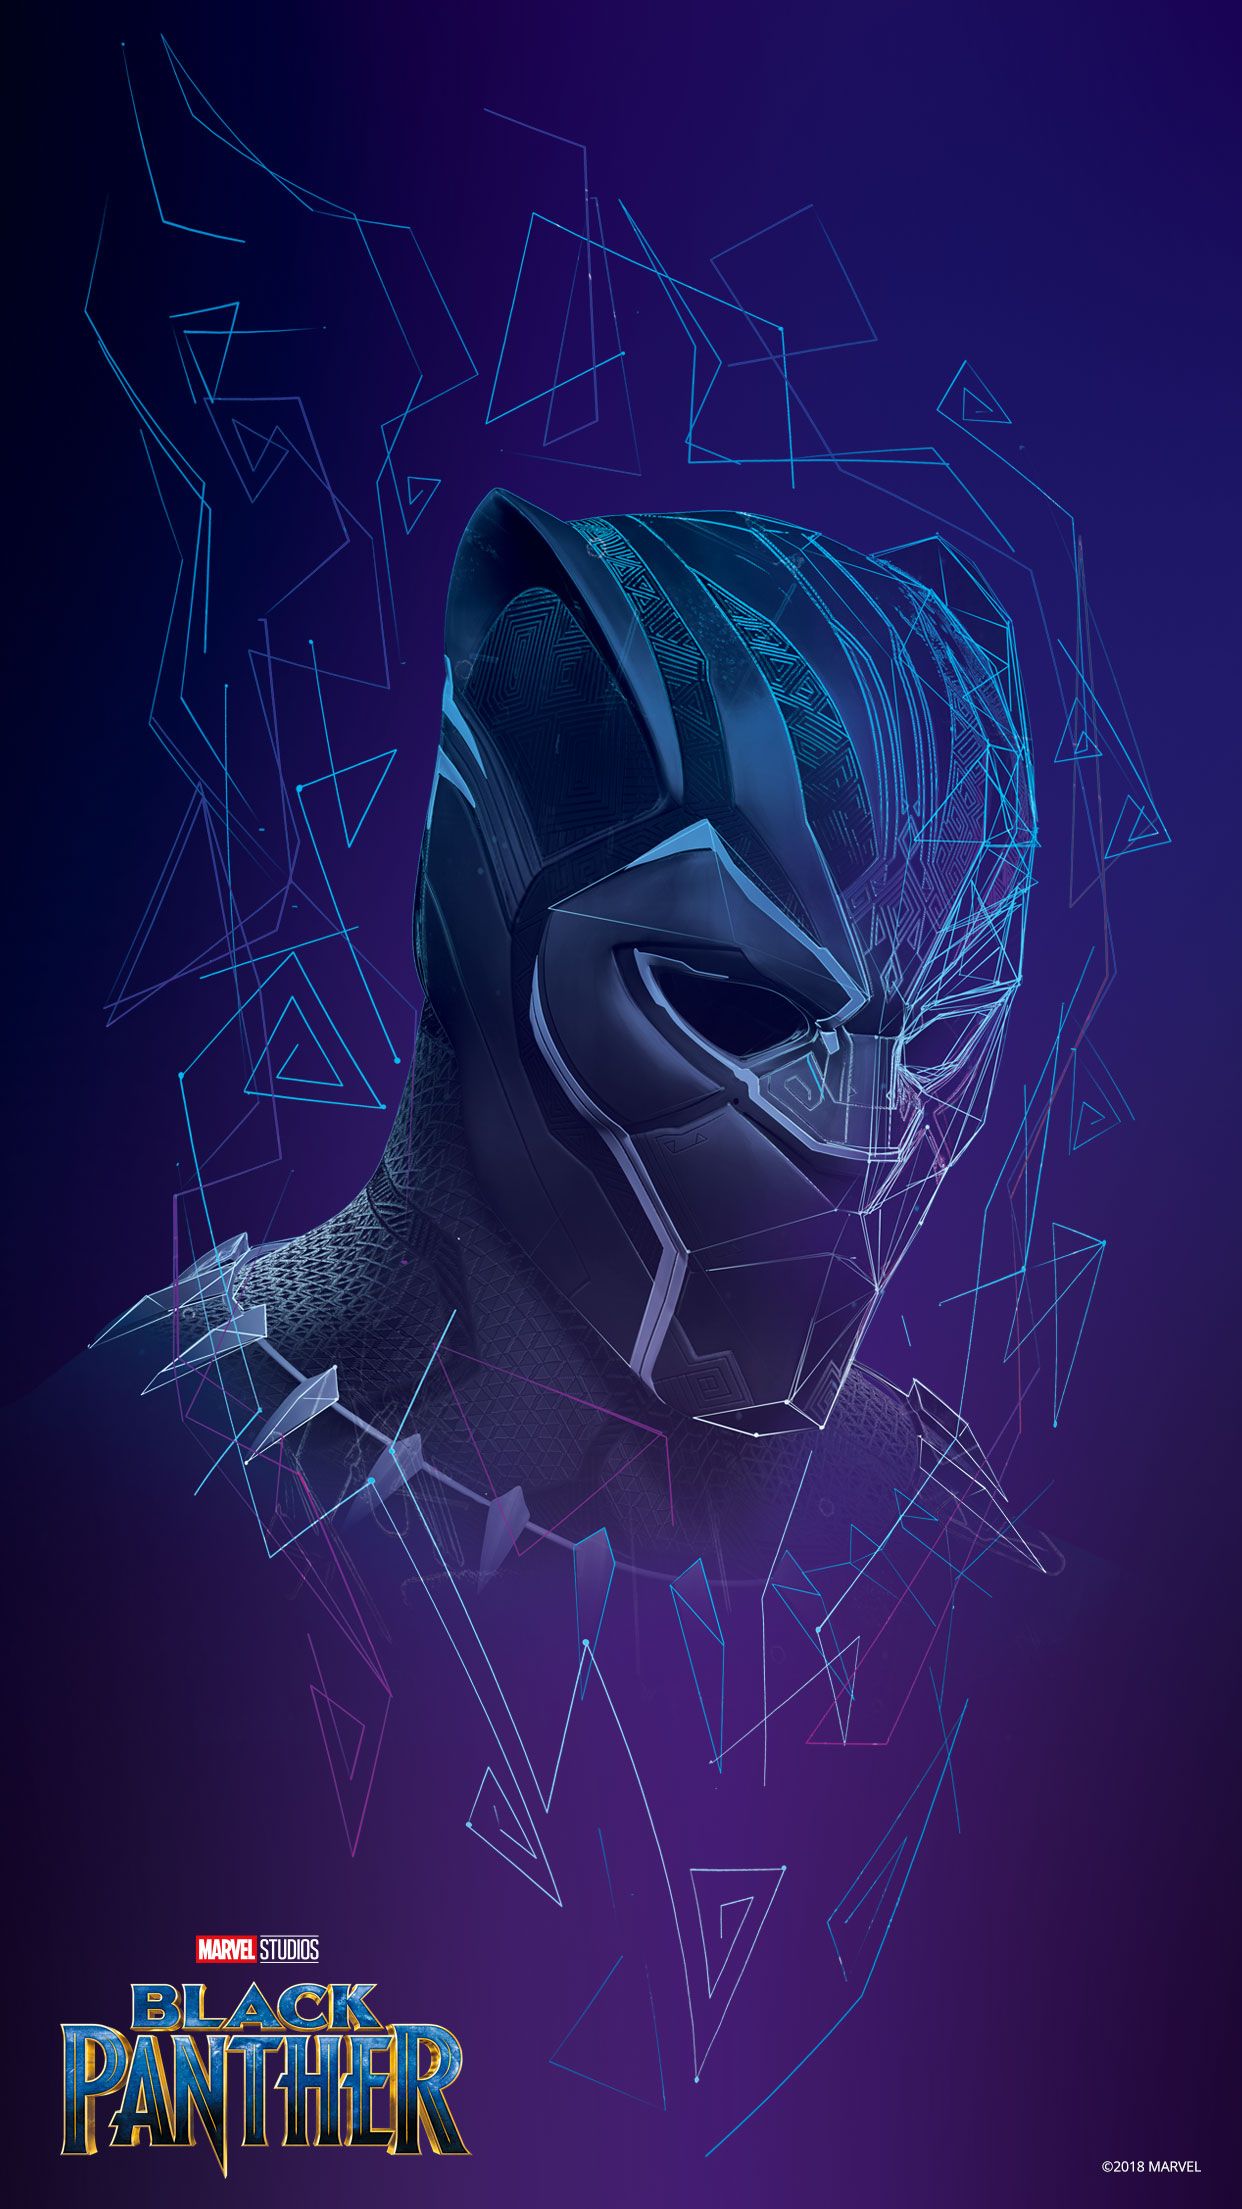 Black Panther Images Black Panther Promotional Still Black Panther Wallpaper Hd 4041 Hd Wallpaper Backgrounds Download